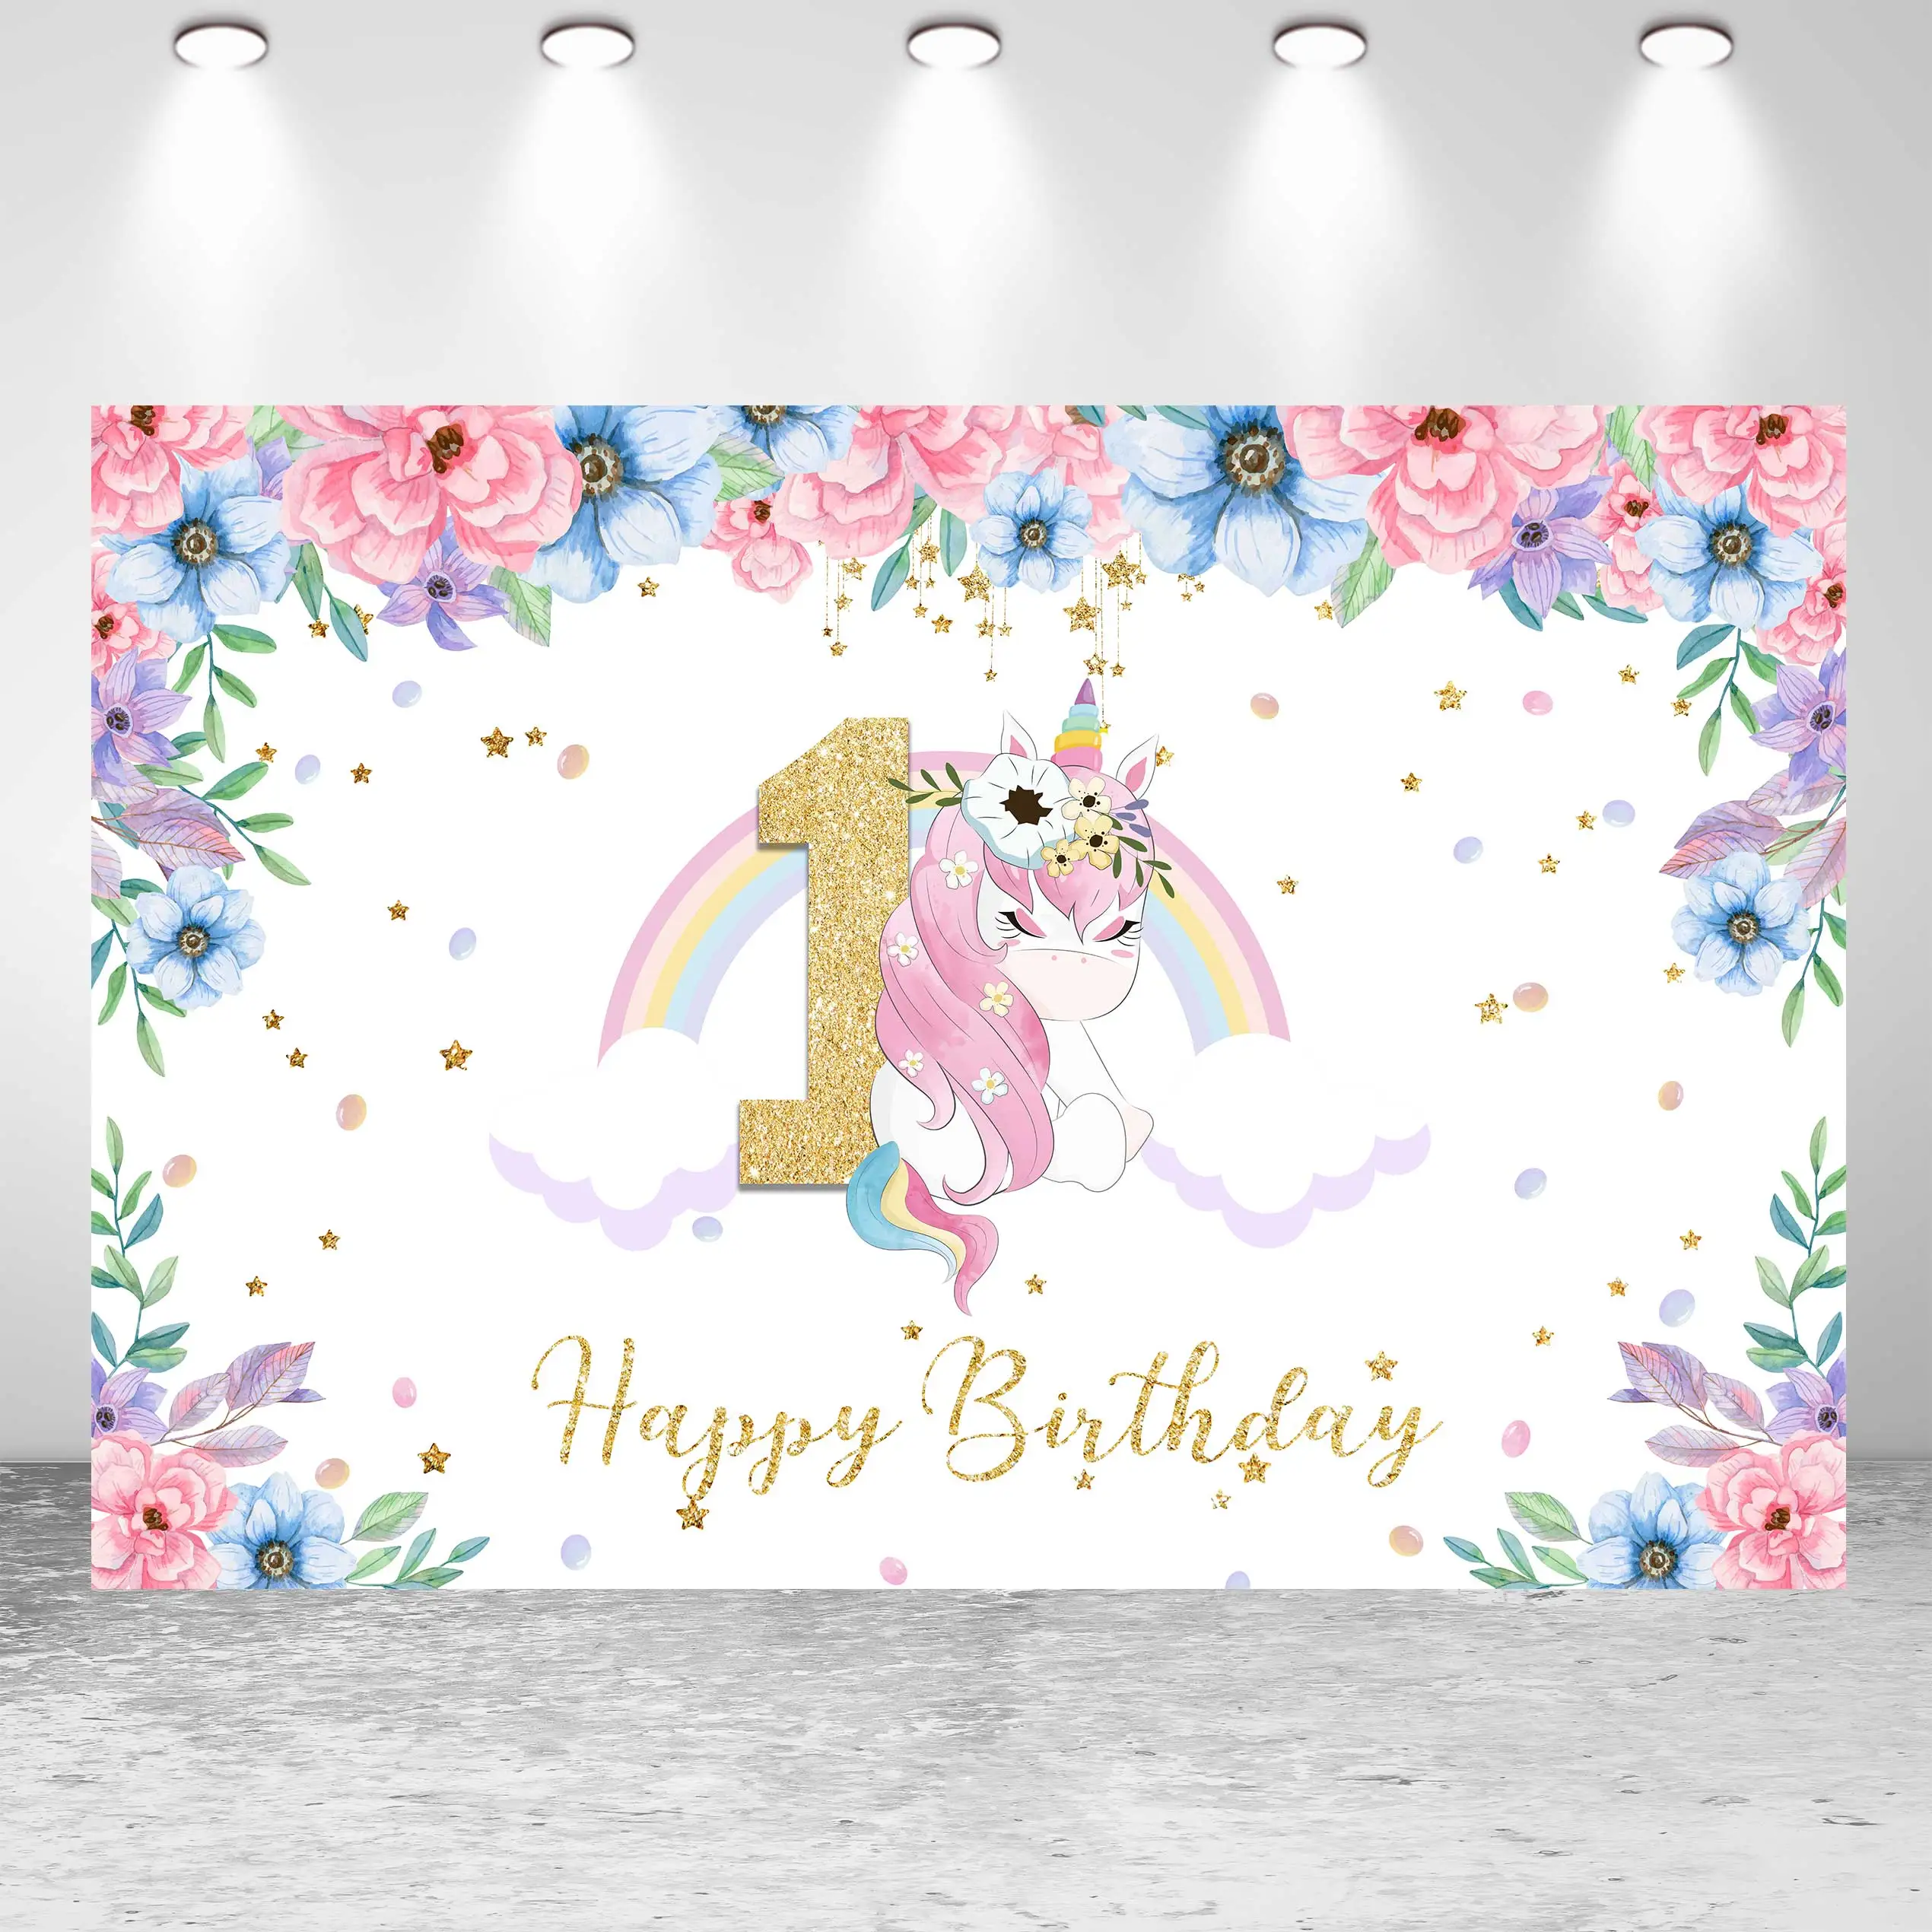 

Фон для фотосъемки с изображением радуги акварели цветов Фэнтези единорога вечеринки в честь Дня Рождения Ребенка NeoBack